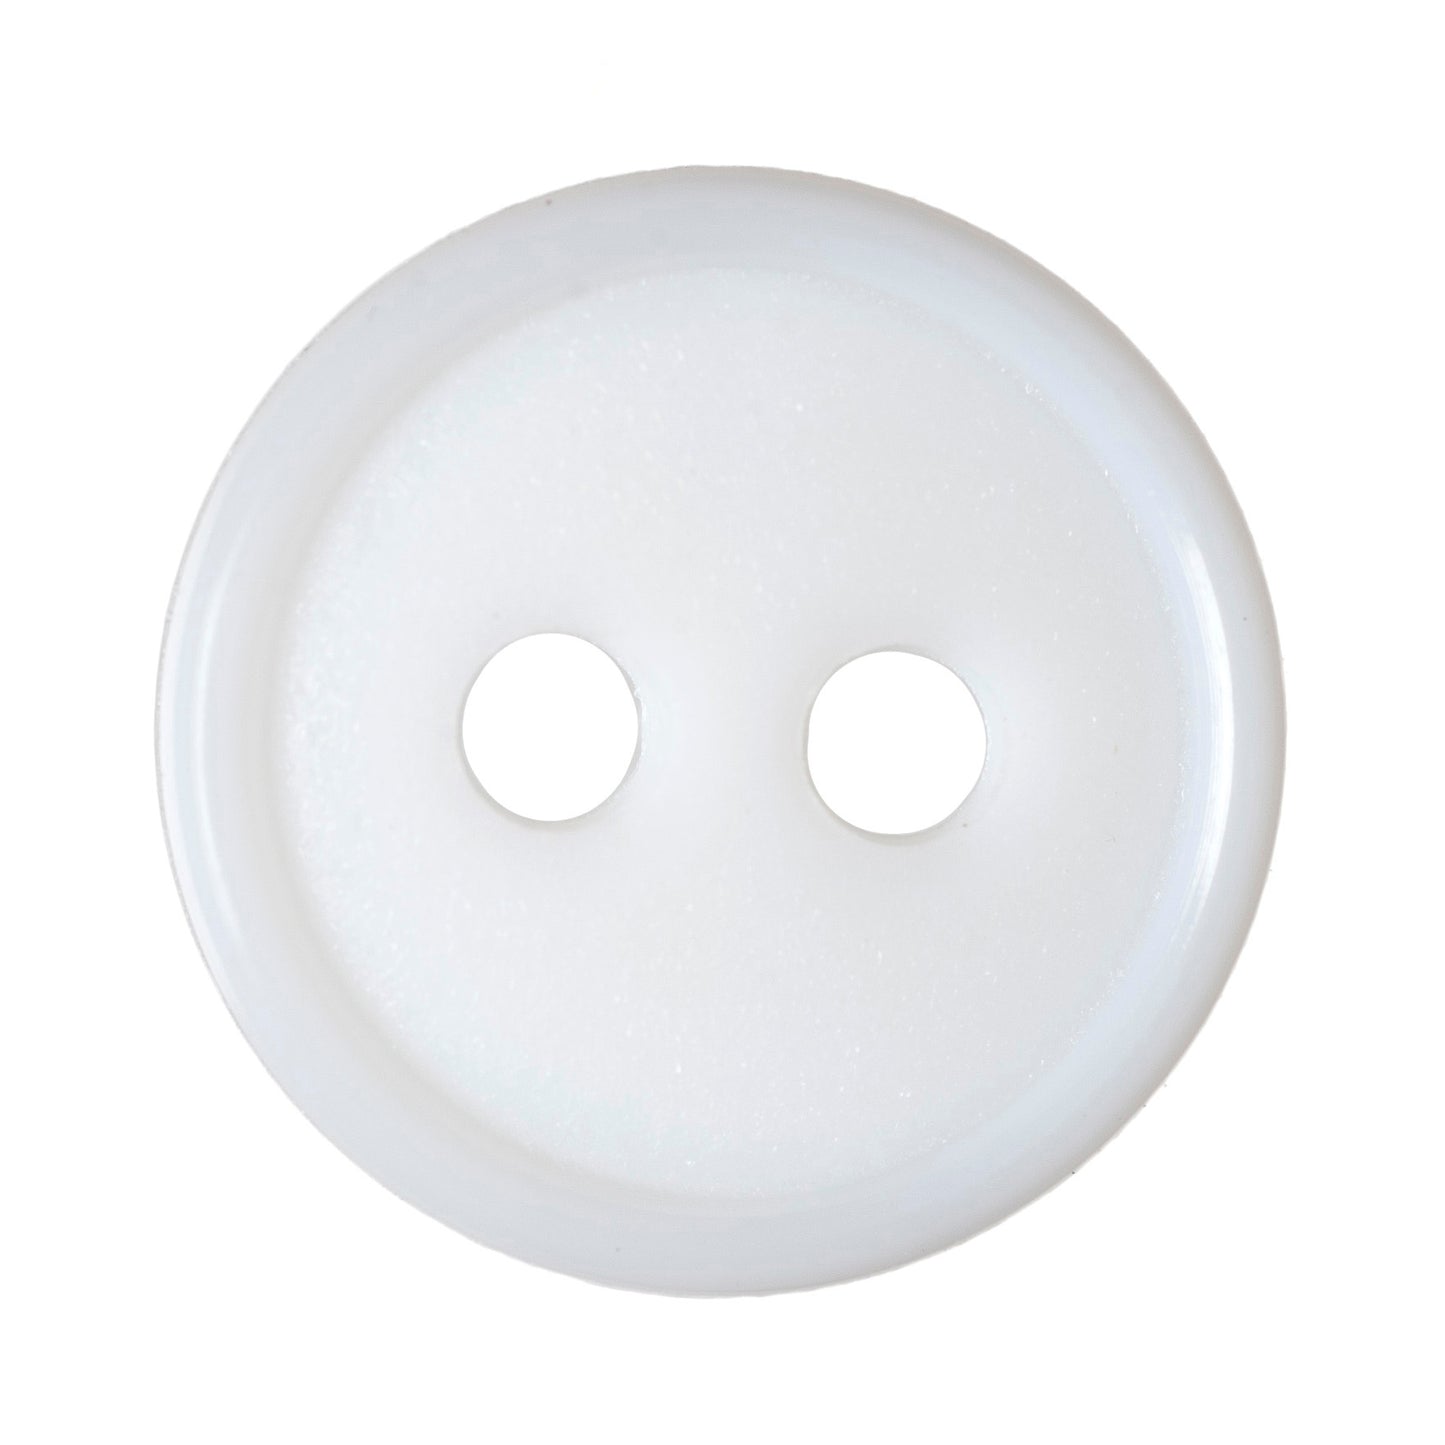 Narrow Rim 2 Hole Button Shiny/Matt - 11mm - White [LB33.1]